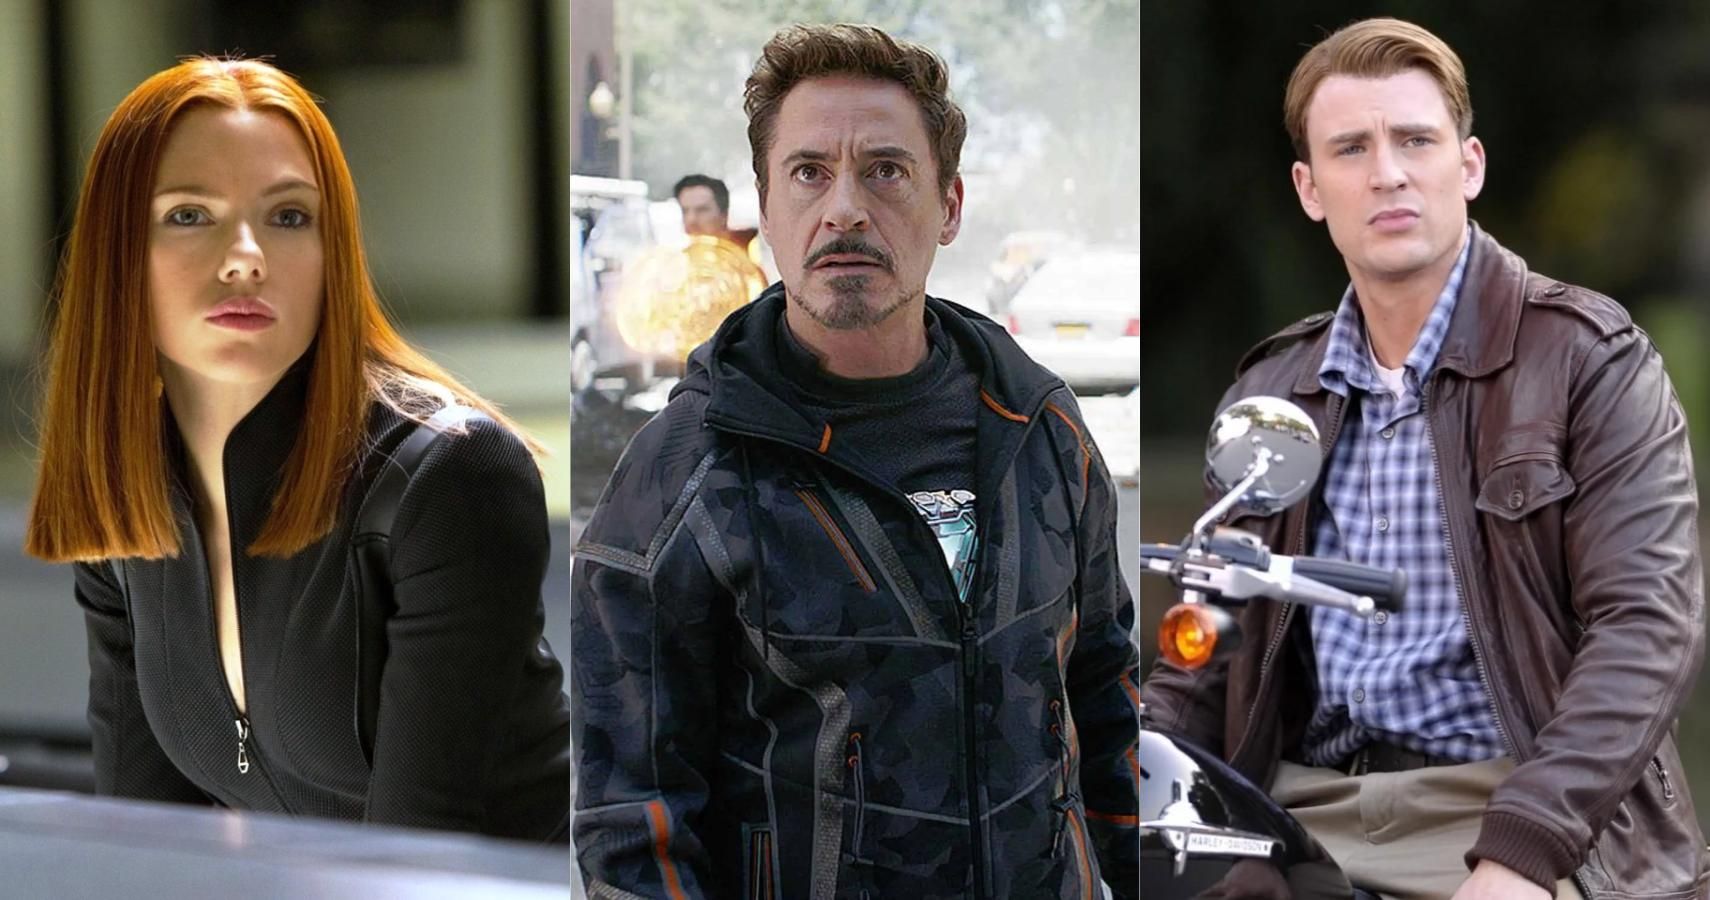 Avengers characters; Natasha Romanoff (Black Widow), Tony Stark (Iron Man), Steve Rogers (Captain America)